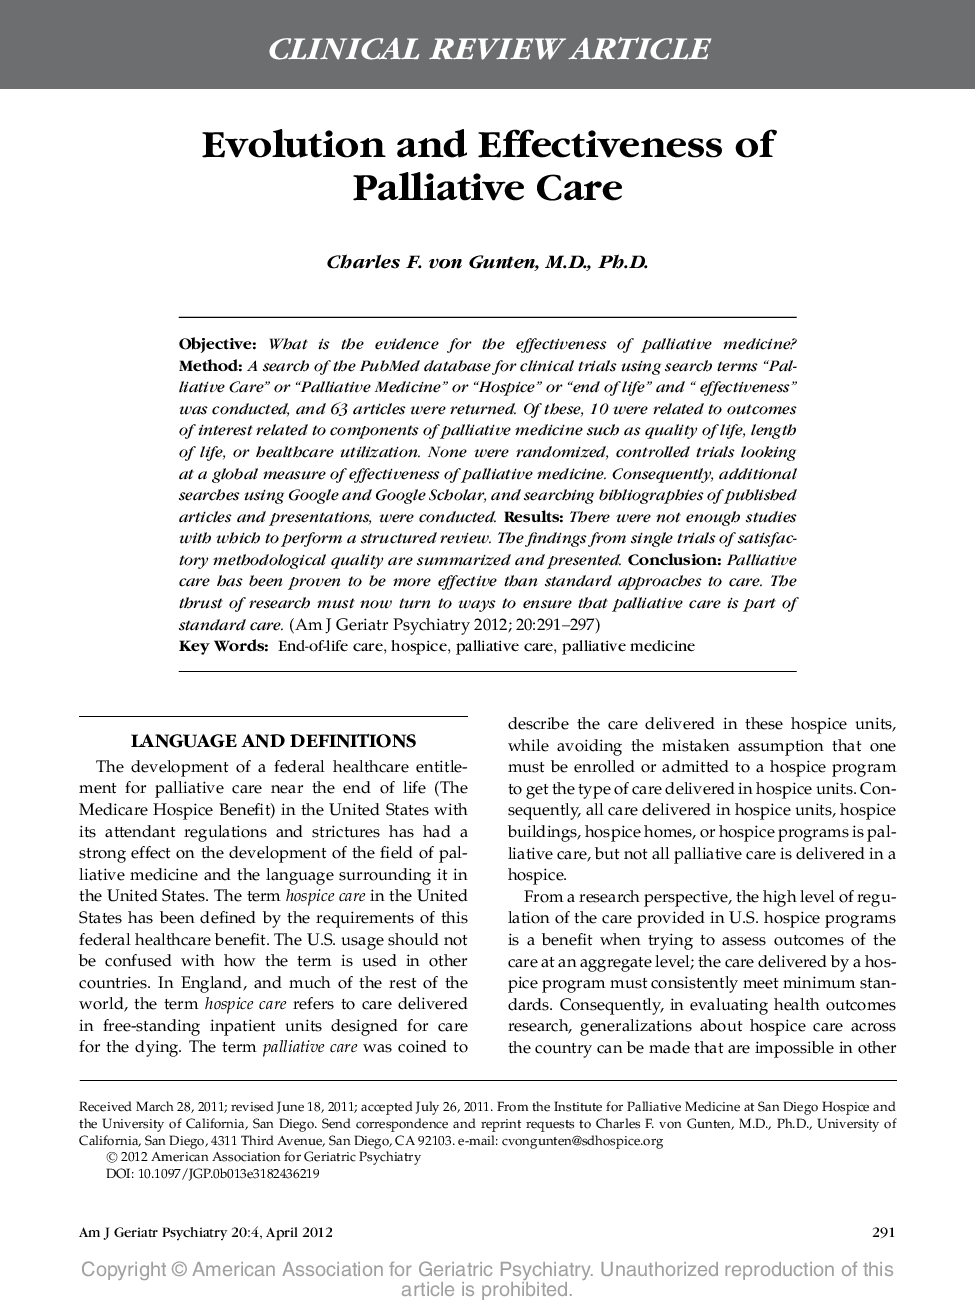 Evolution and Effectiveness of Palliative Care